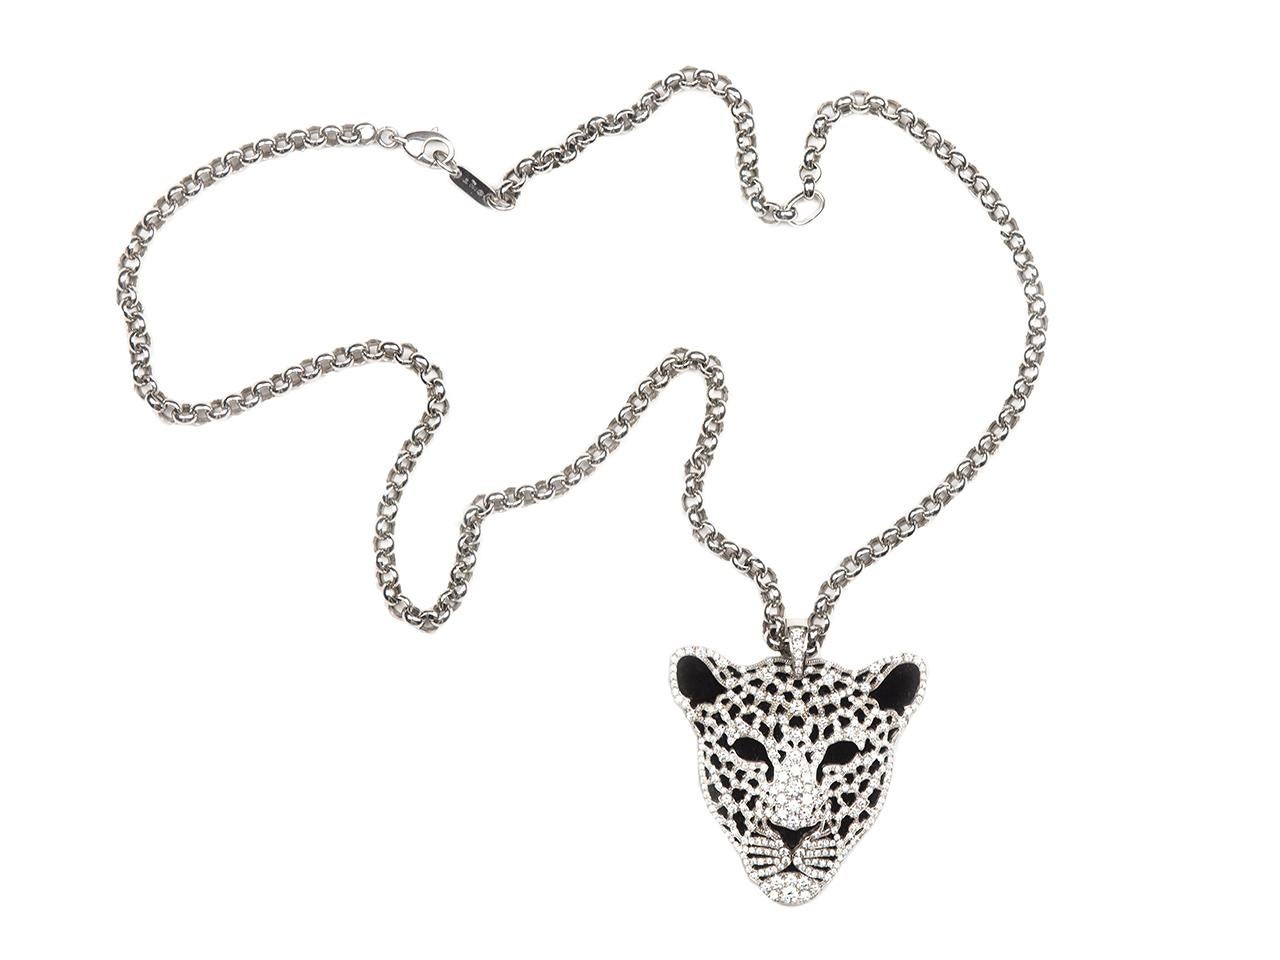 18k gold diamond and onyx leopard pendant necklace. Signed.